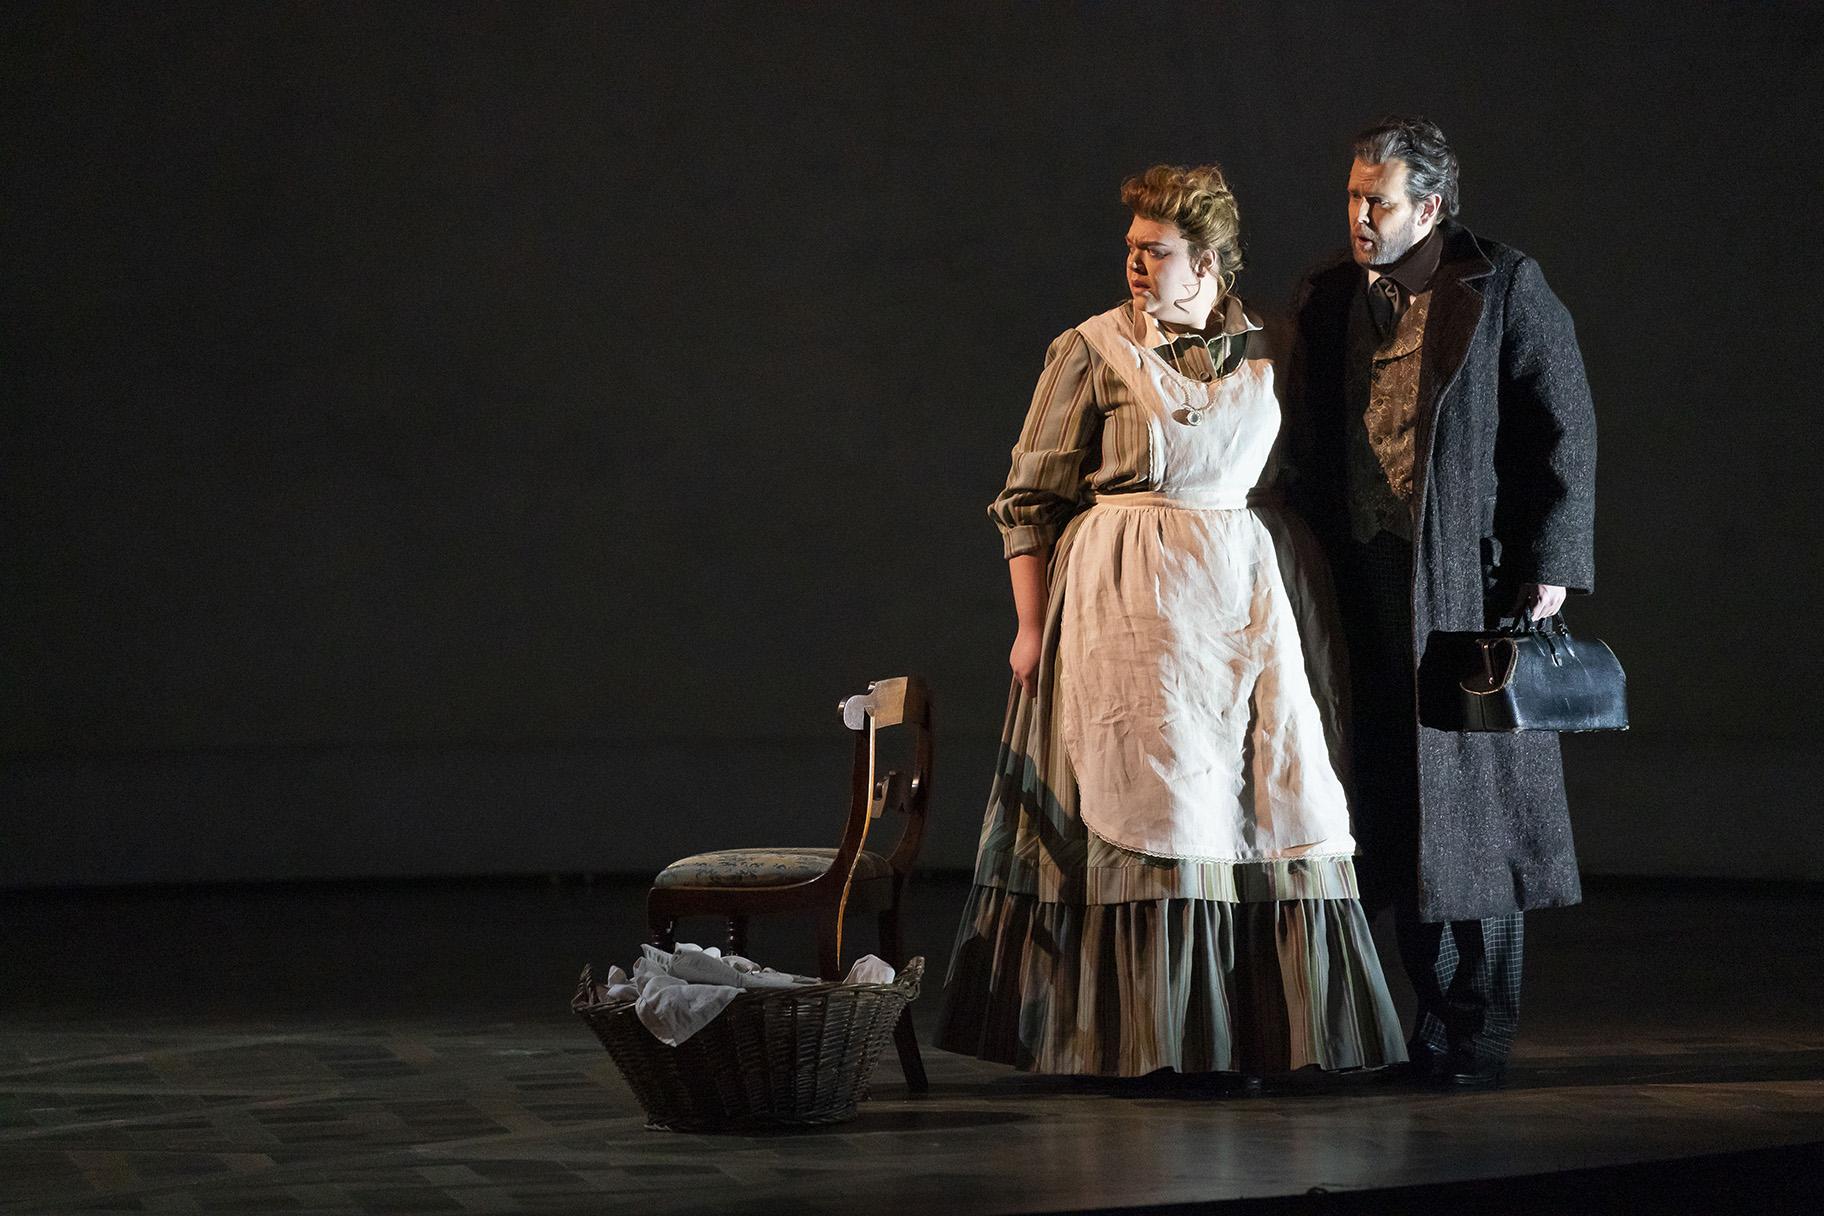 Lauren Decker and David Weigel in “La Traviata” (Credit: Todd Rosenberg)